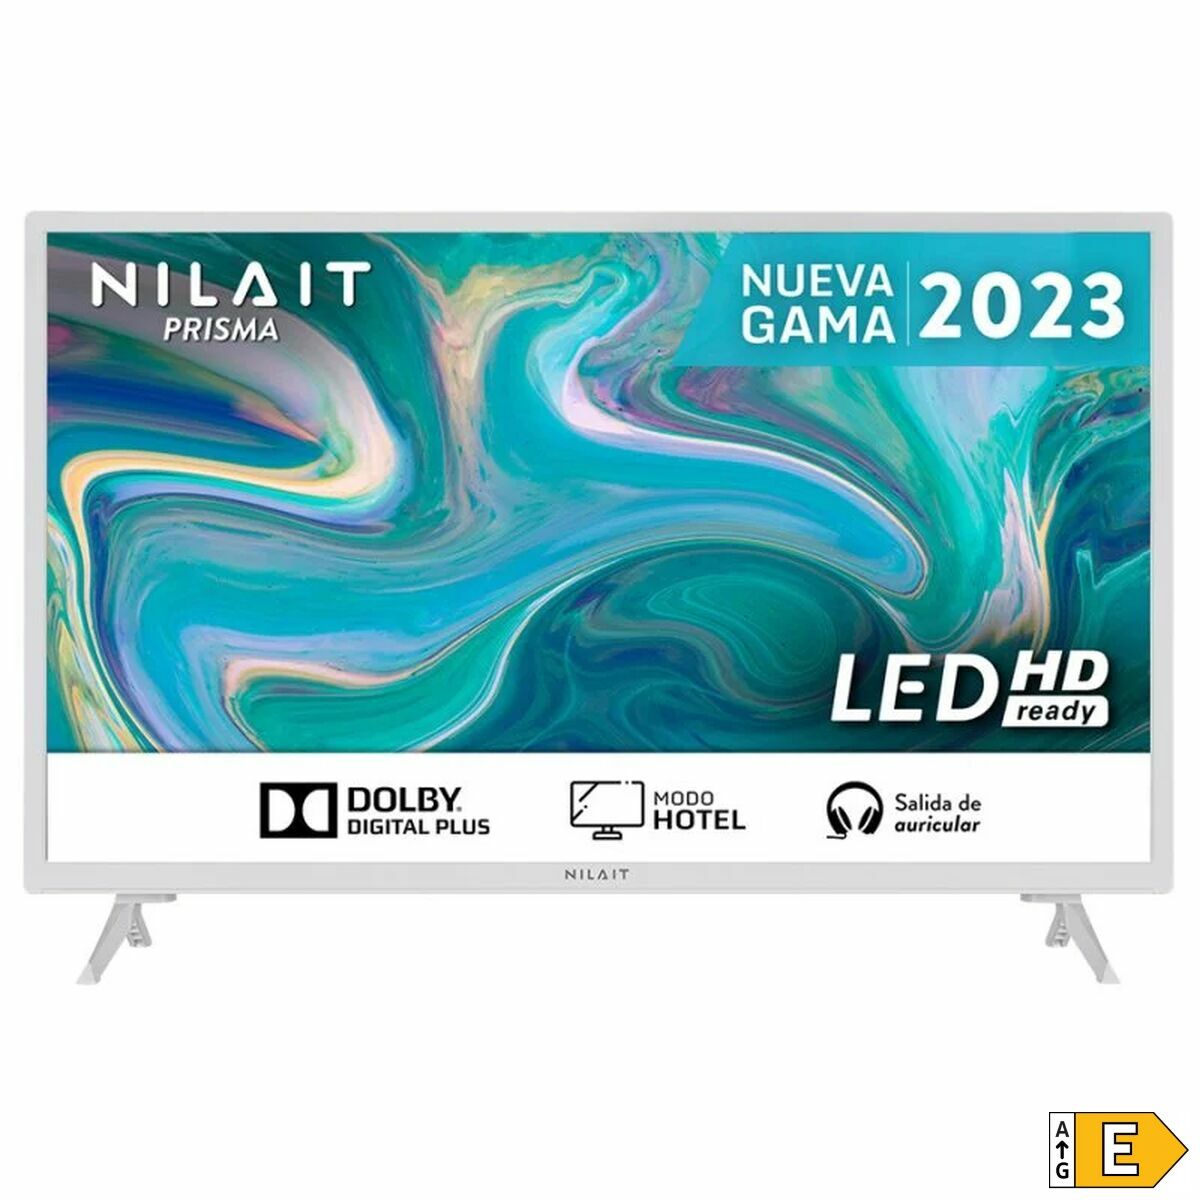 LED TV Nilait Prisma NI-32HB7001NW 32"